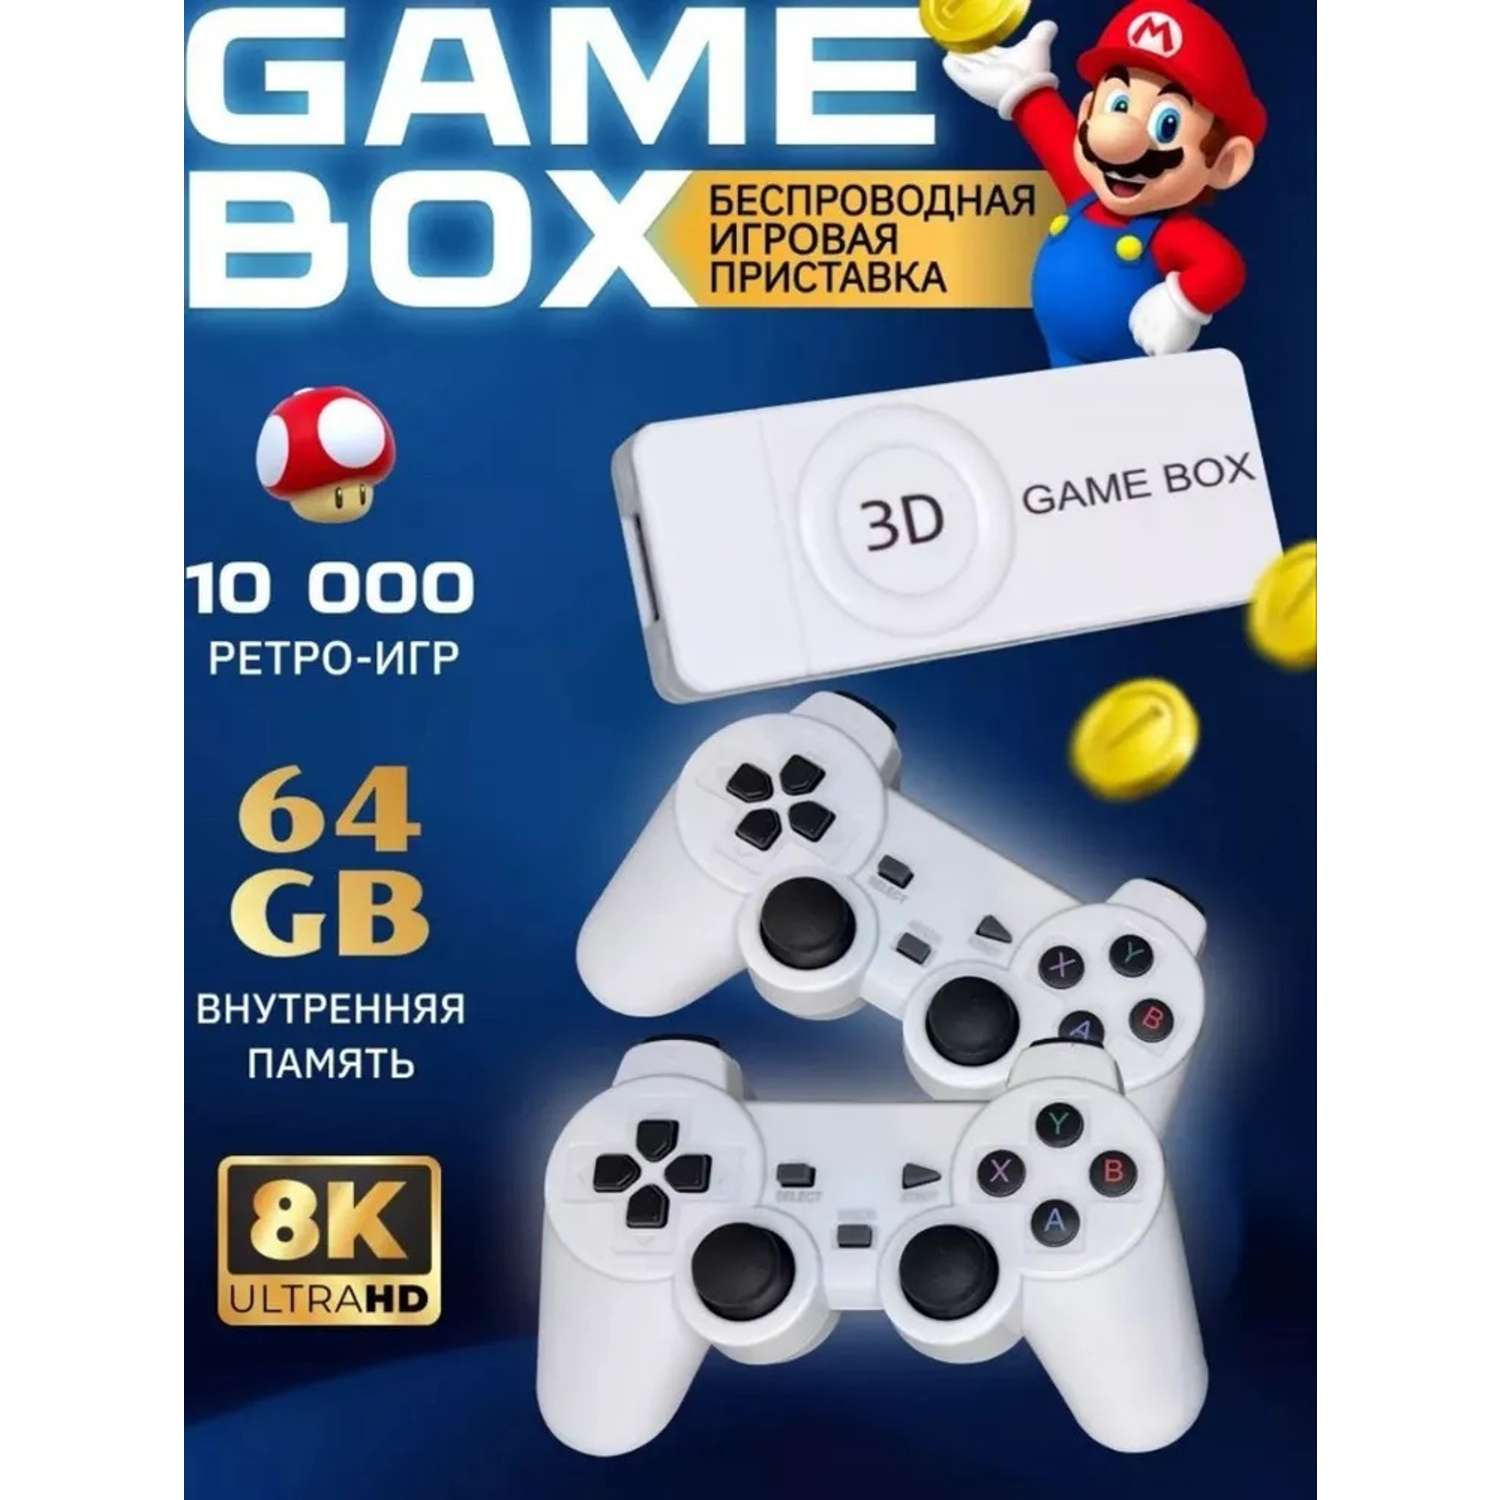 Приставка игровая GameBOX CASTLELADY 8K Ultra HDGame Box M10 - фото 2